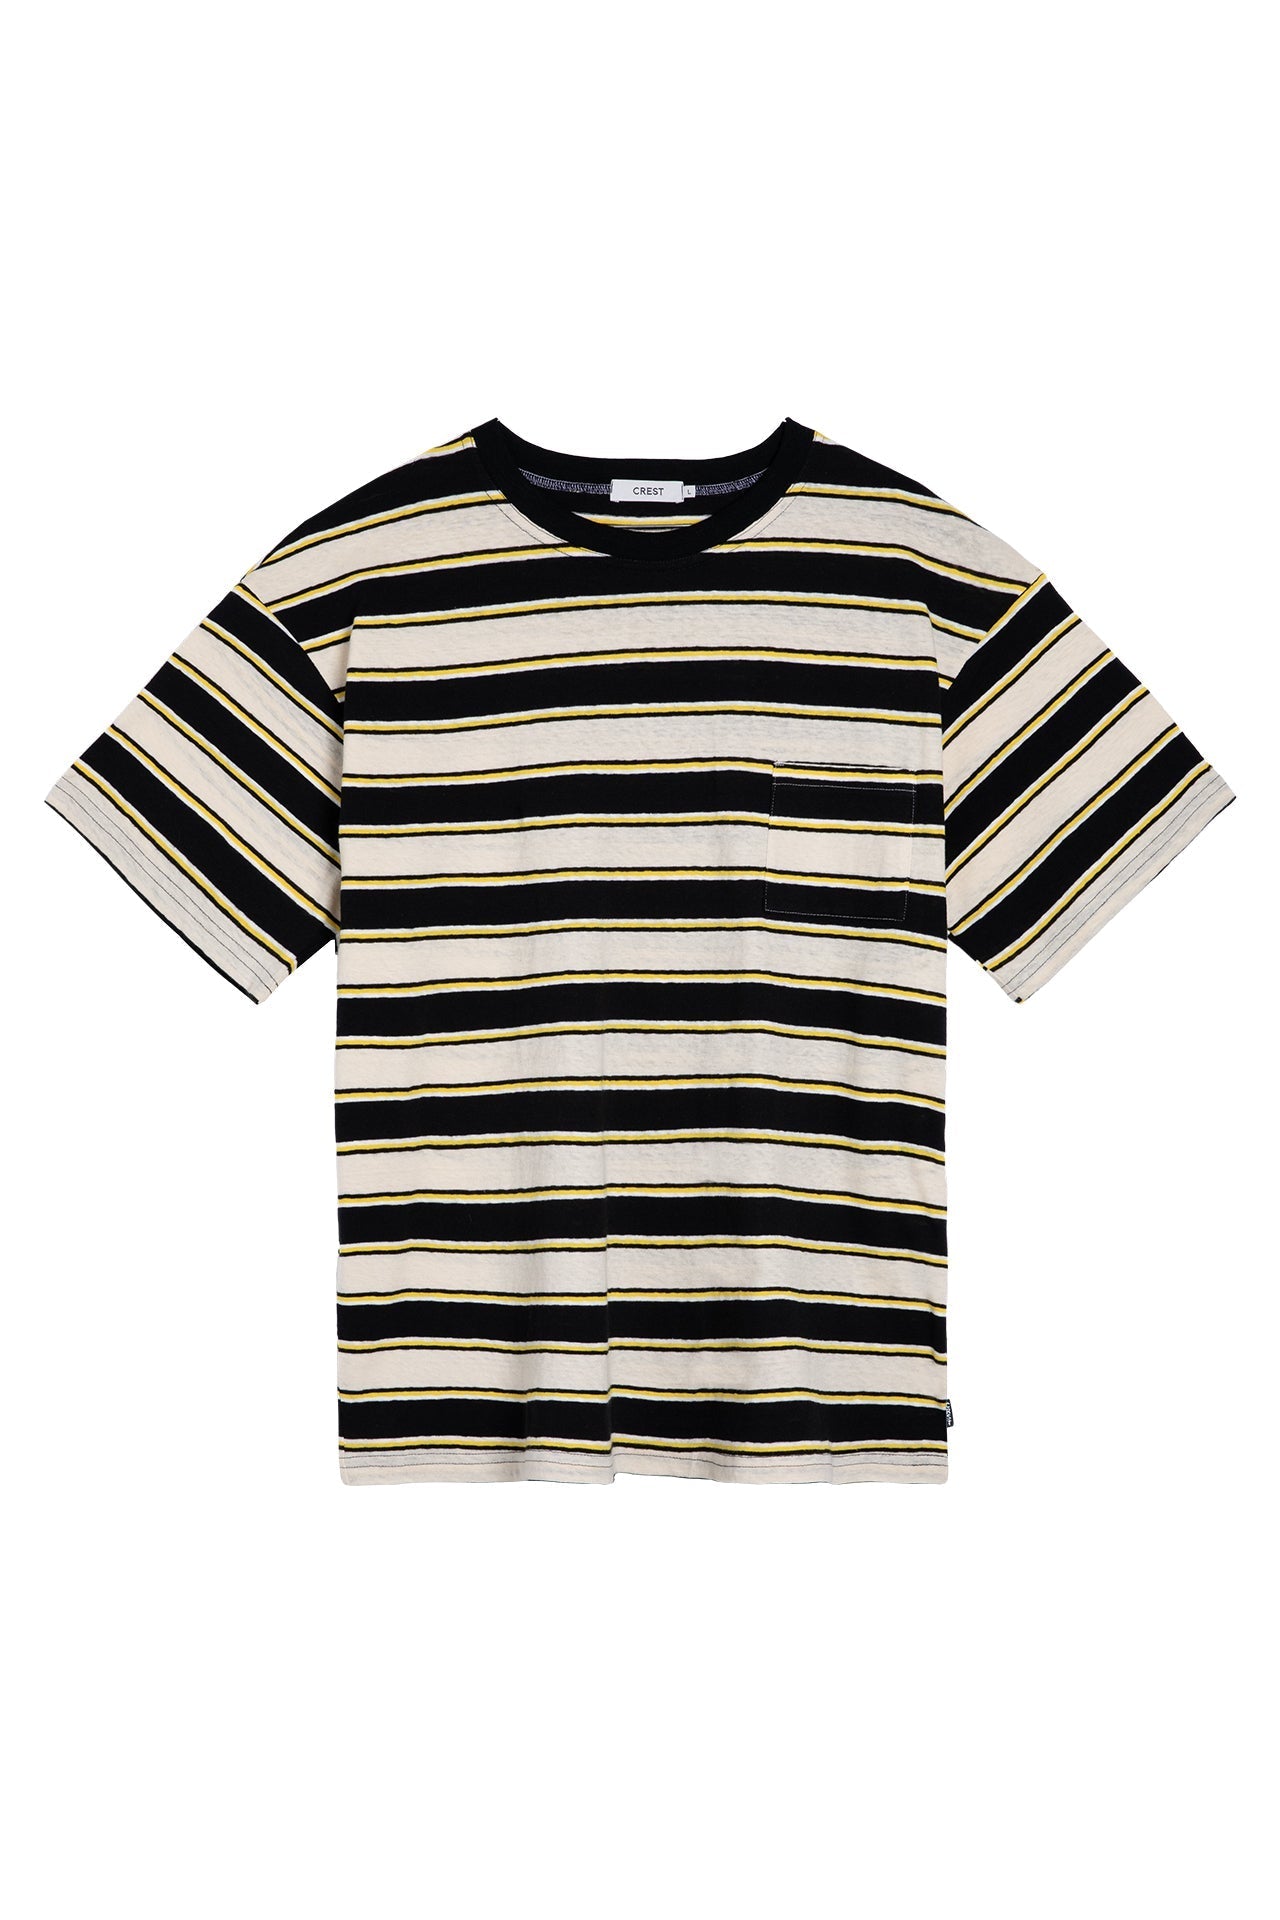 CREST Black Striped T-Shirt - Product Shot